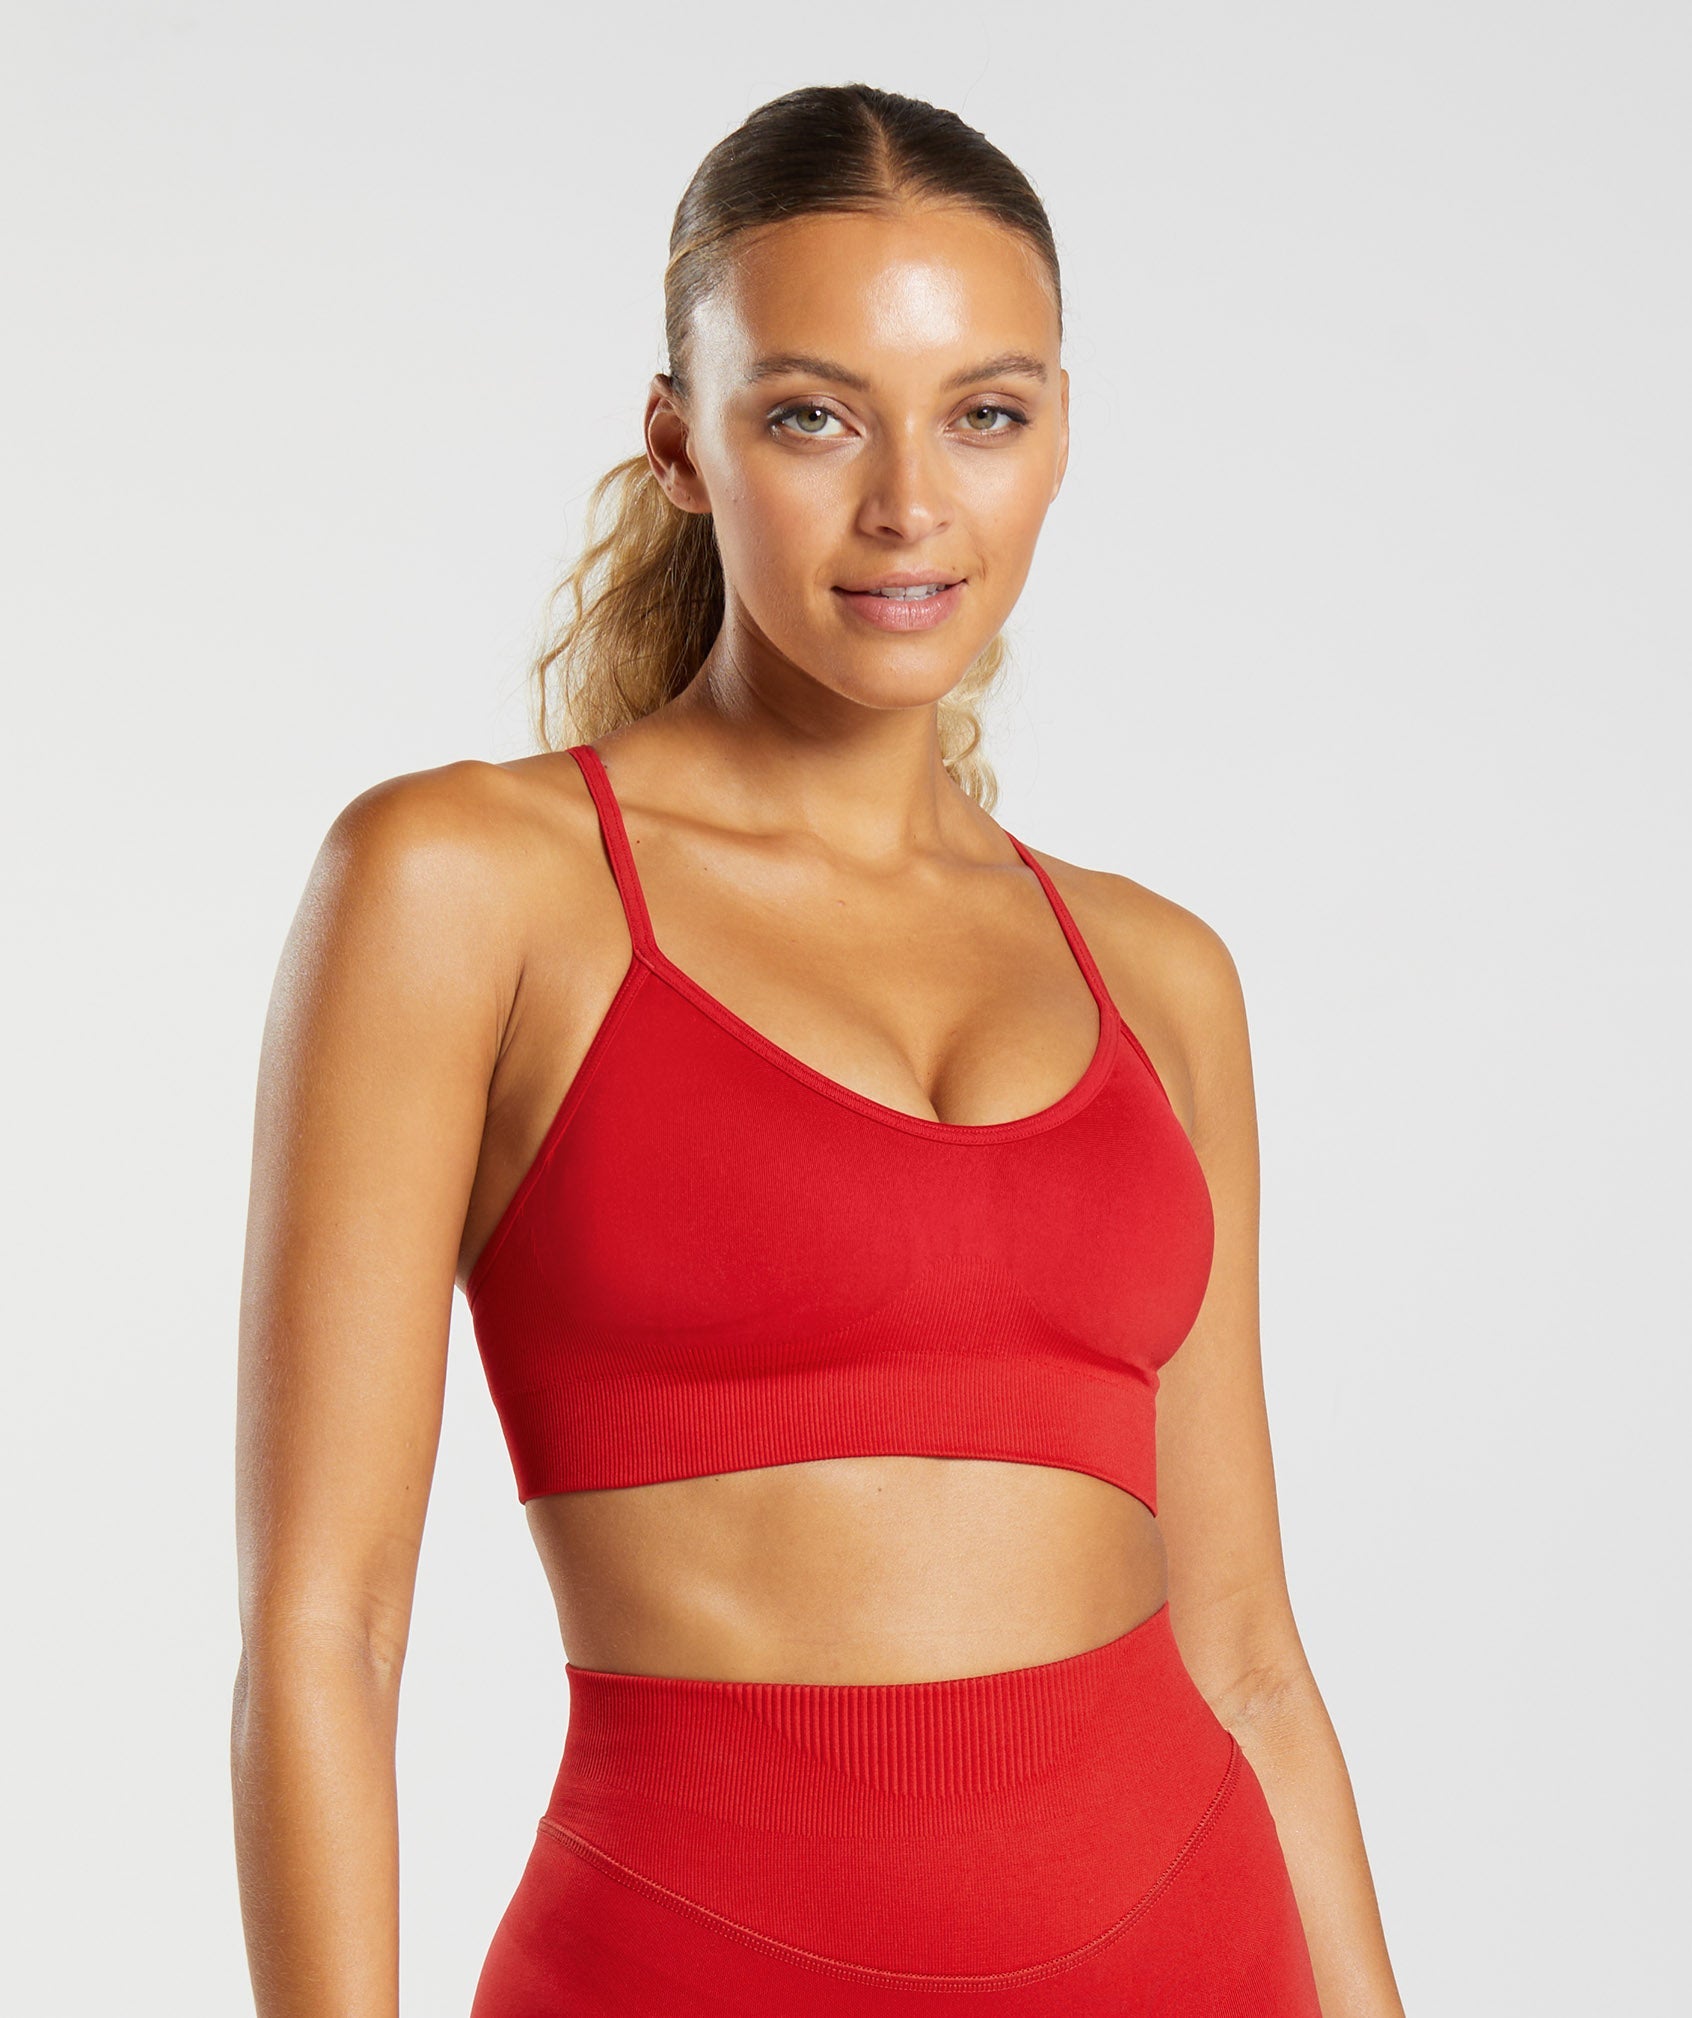 Women, Redbat red sports bra